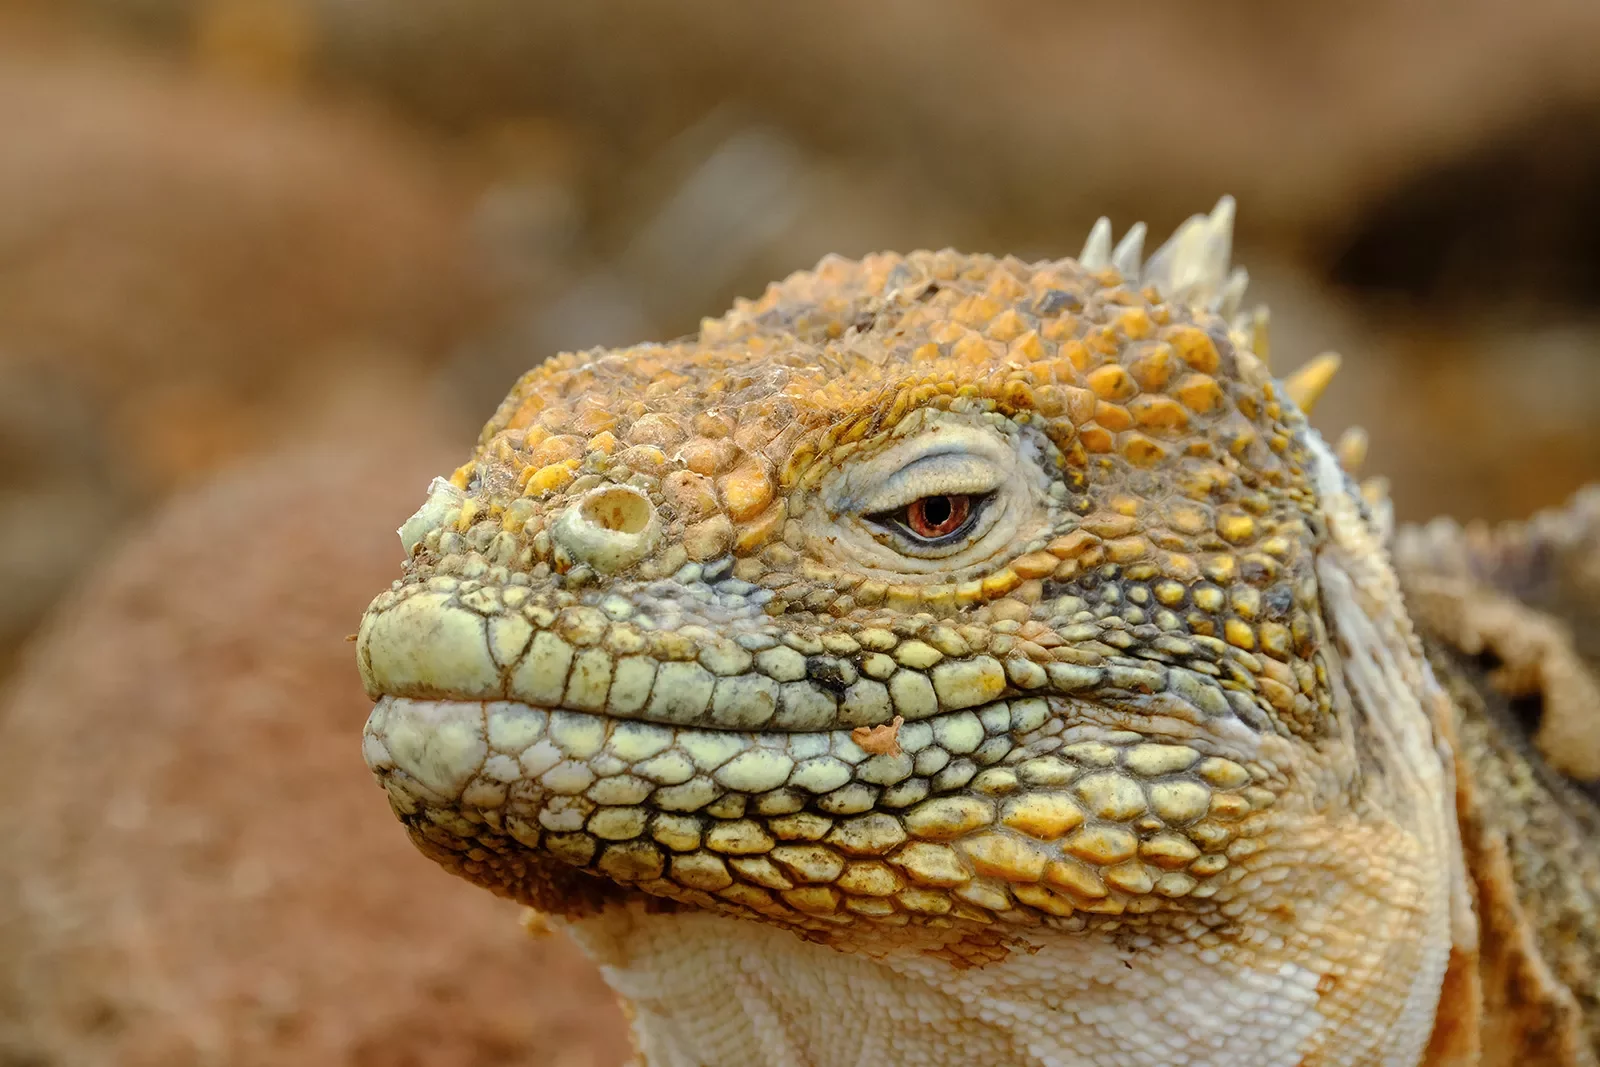 Reptile's face